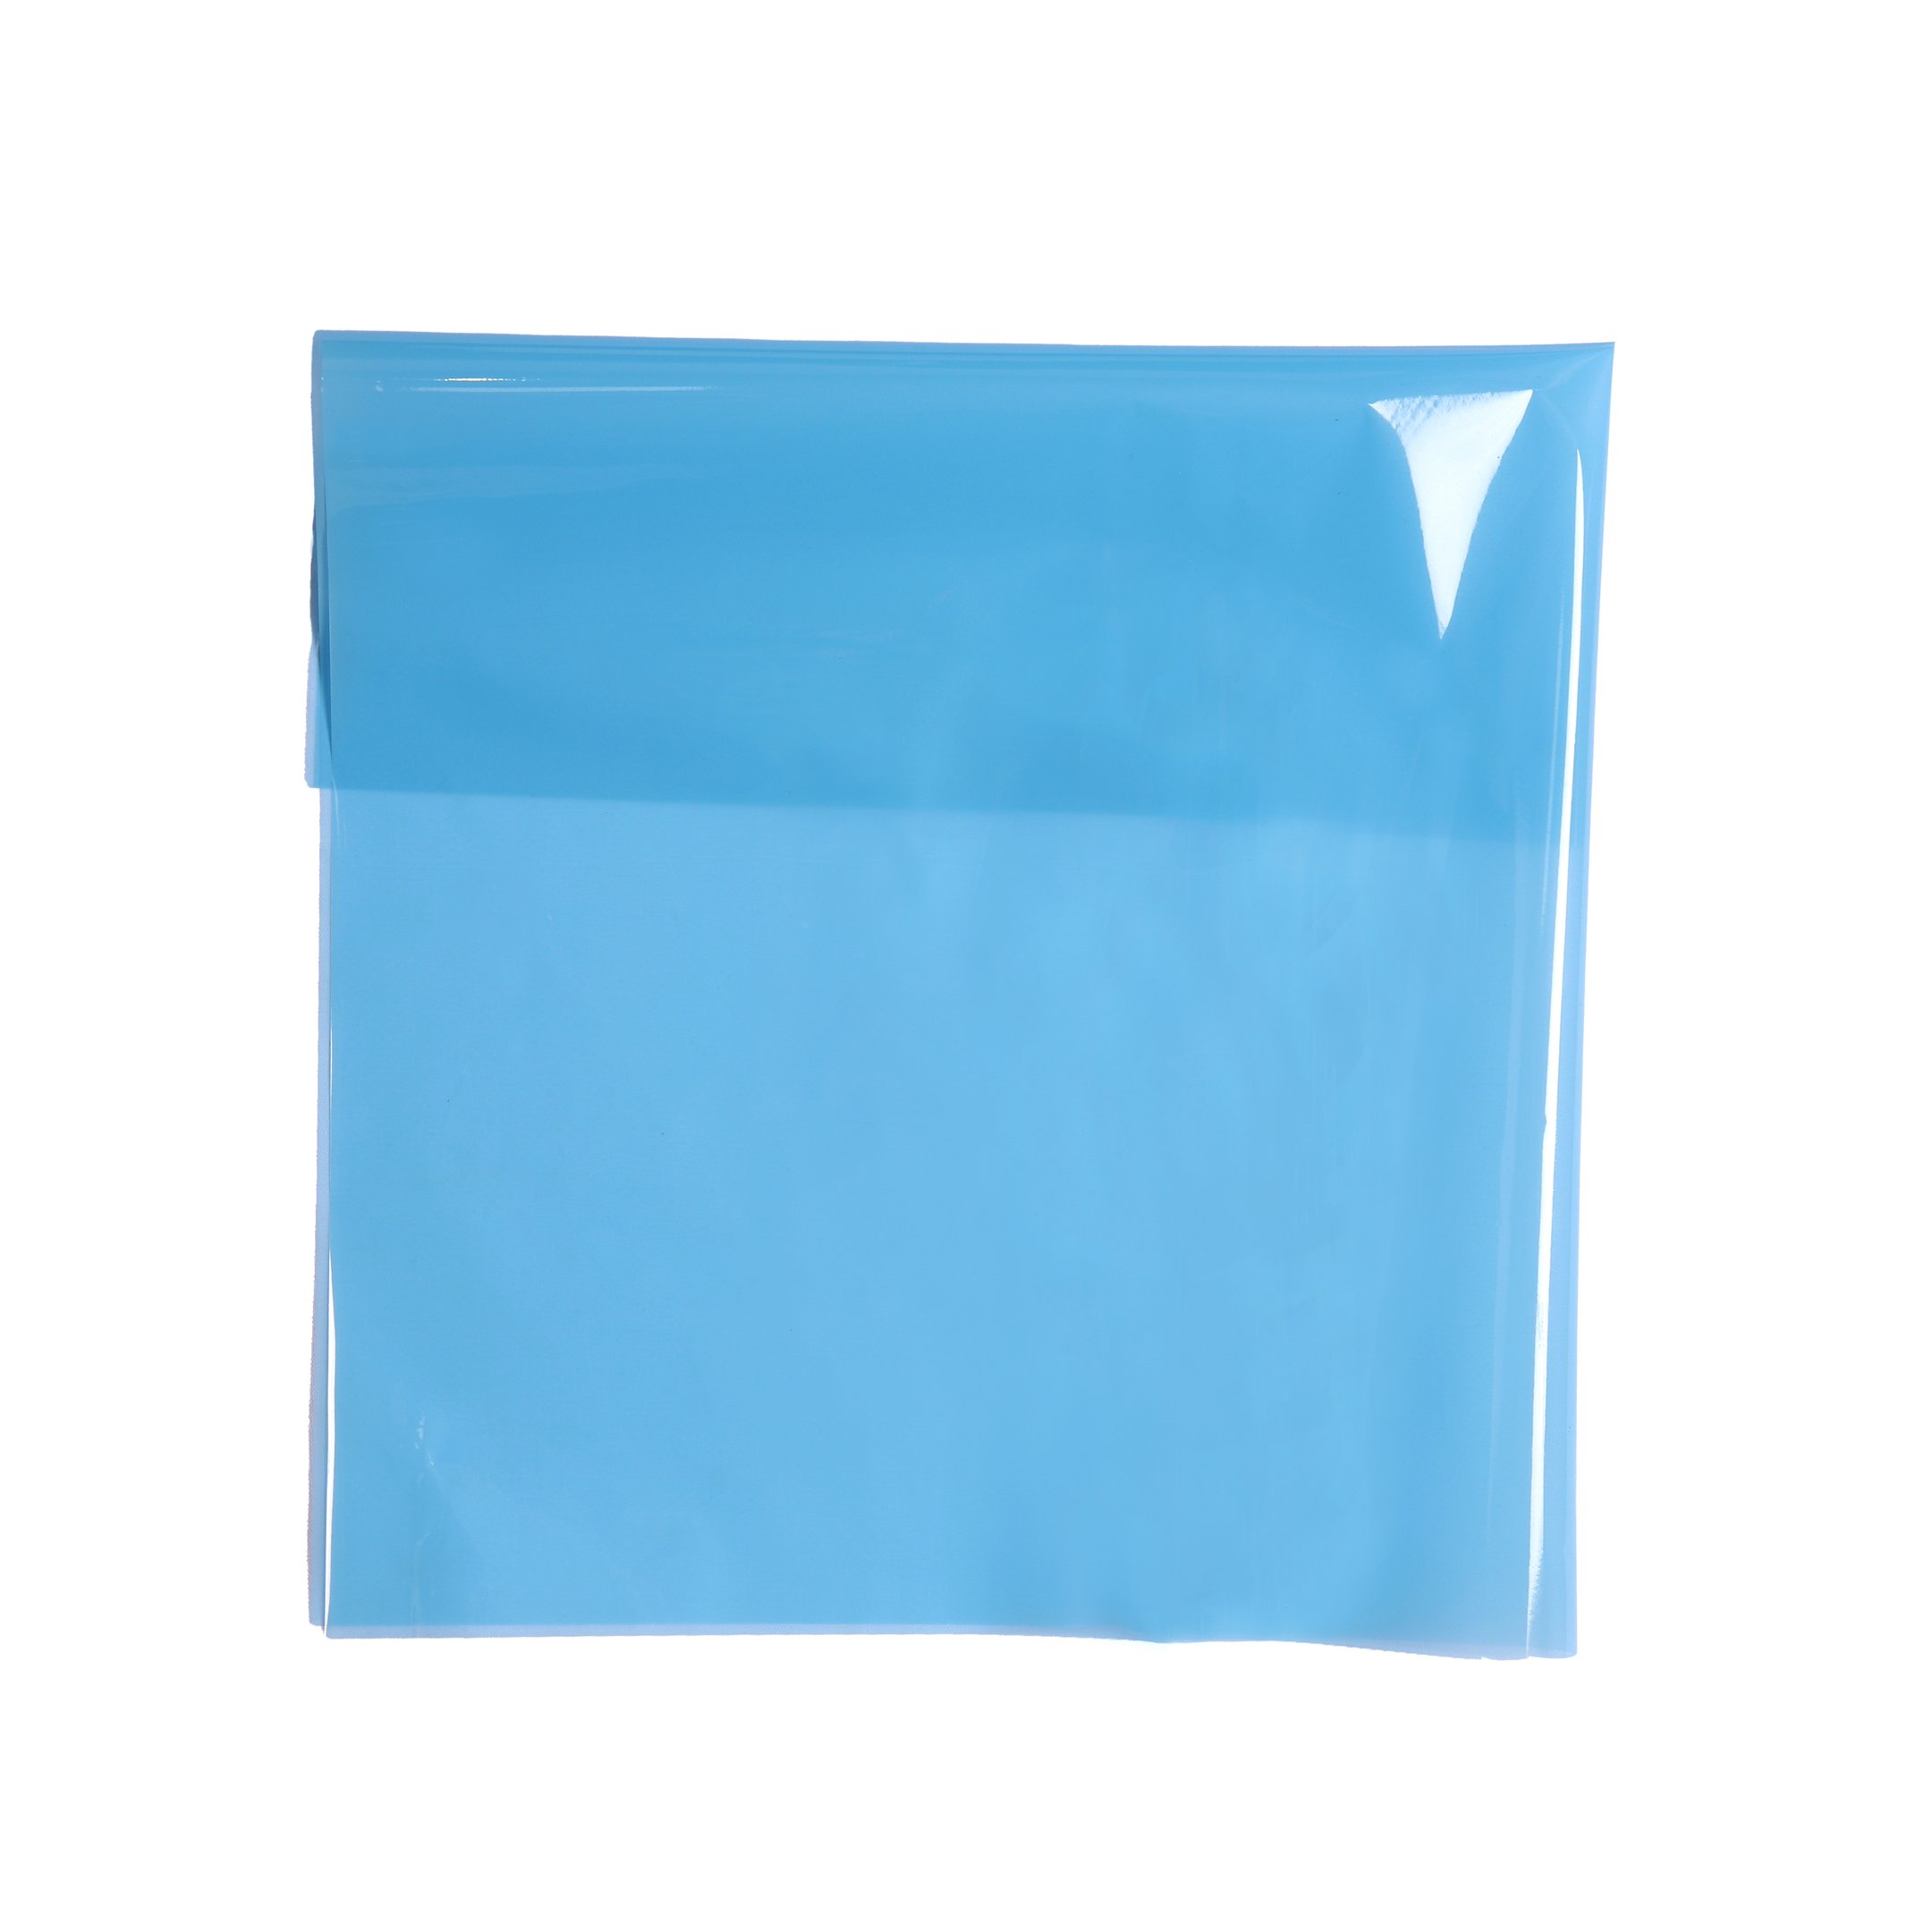 Papel Celofane Azul Claro Personalize 50x70cm 1 Unid